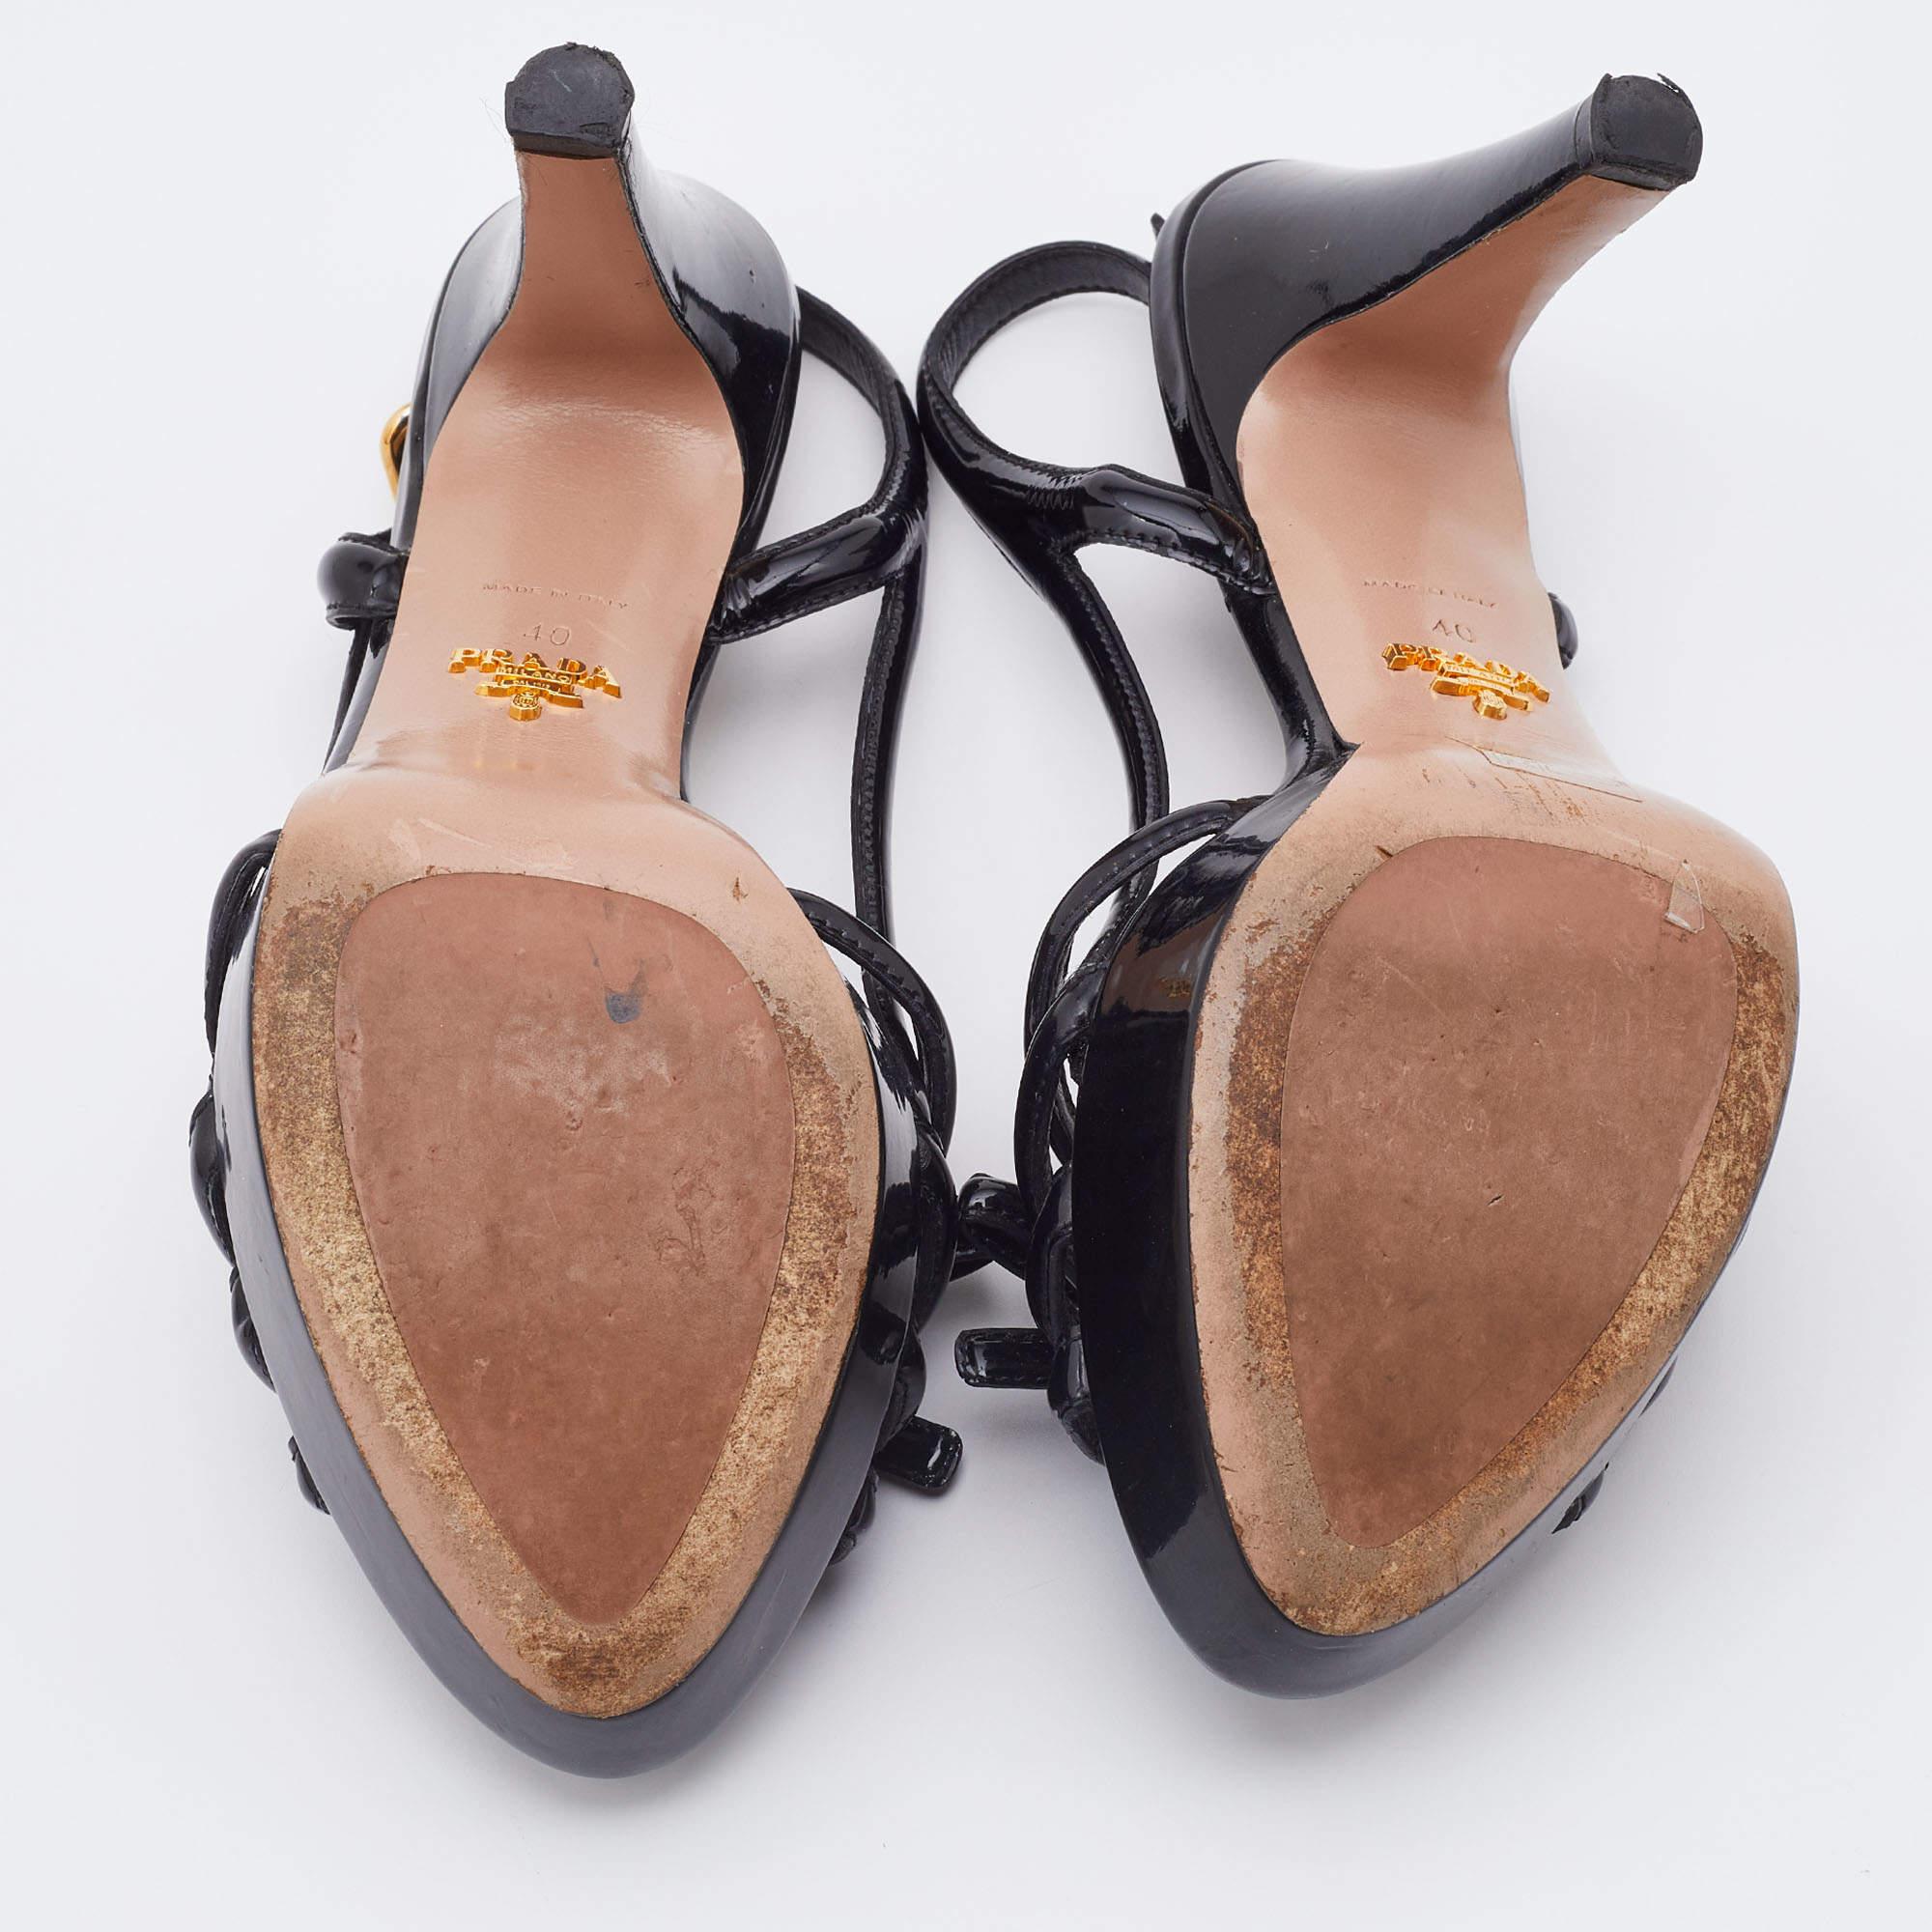 Prada Black Patent Leather Strappy Platform Sandals Size 40 4